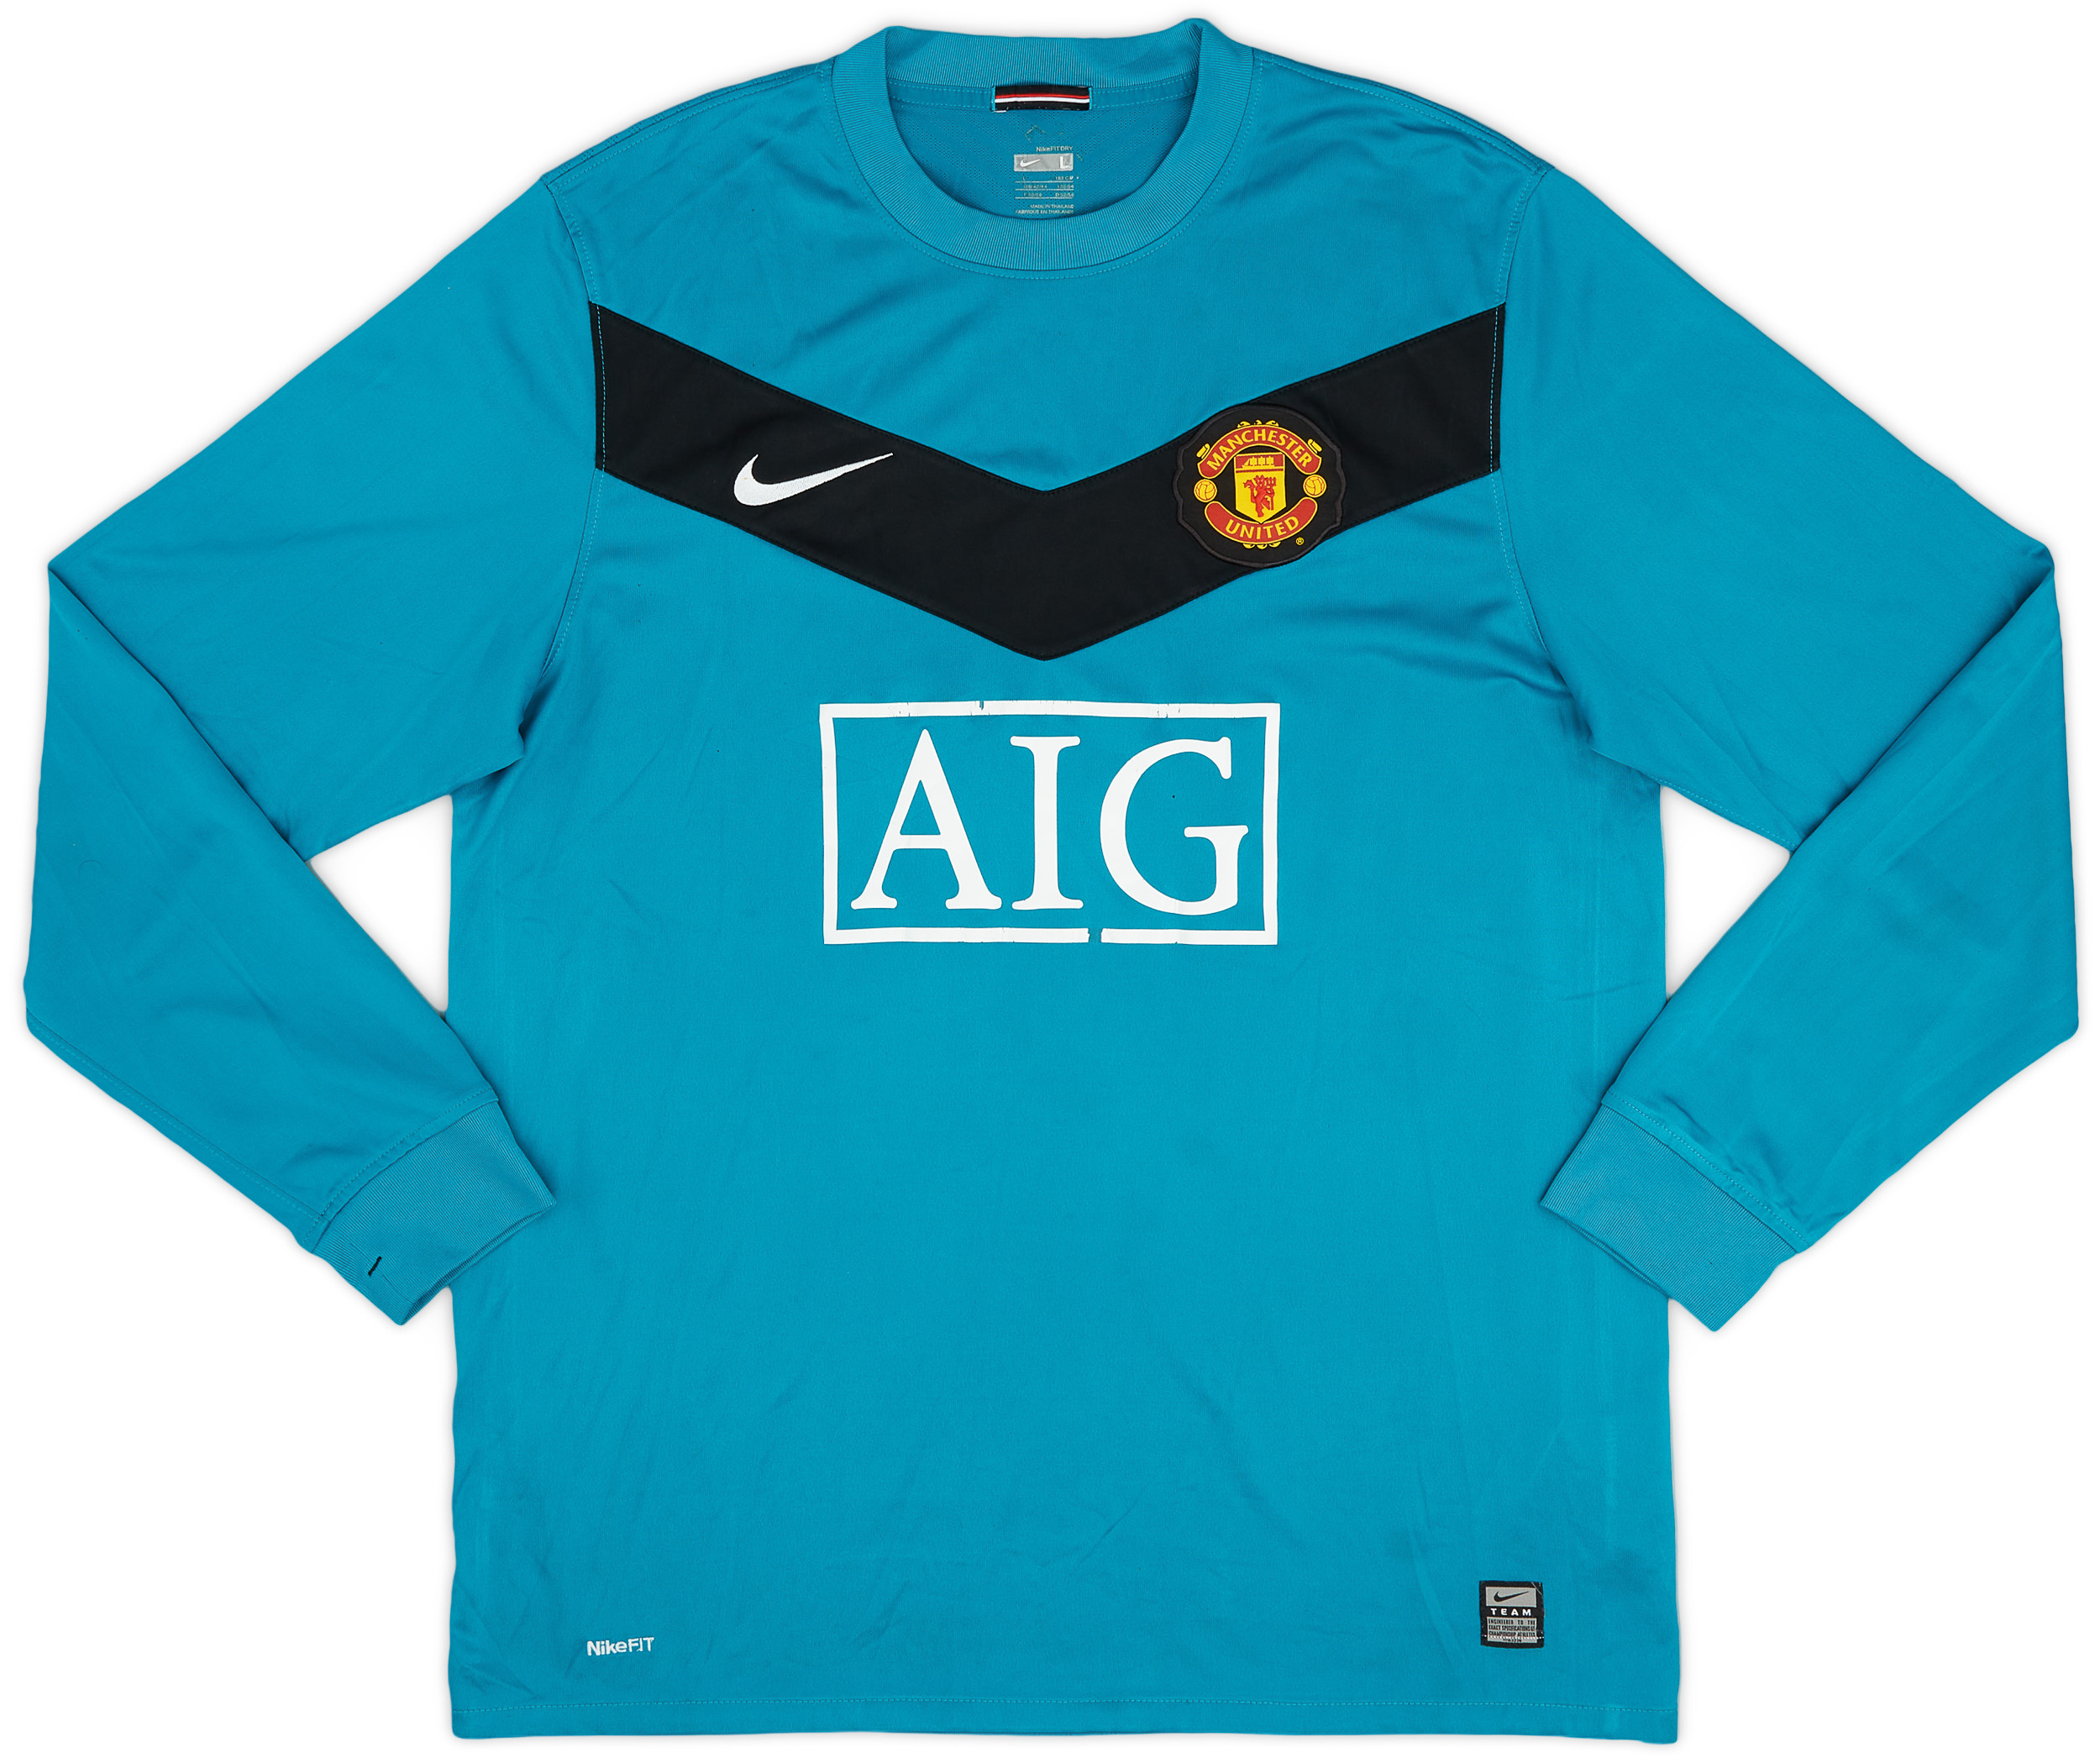 2009-10 Manchester United GK Shirt - 5/10 - ()